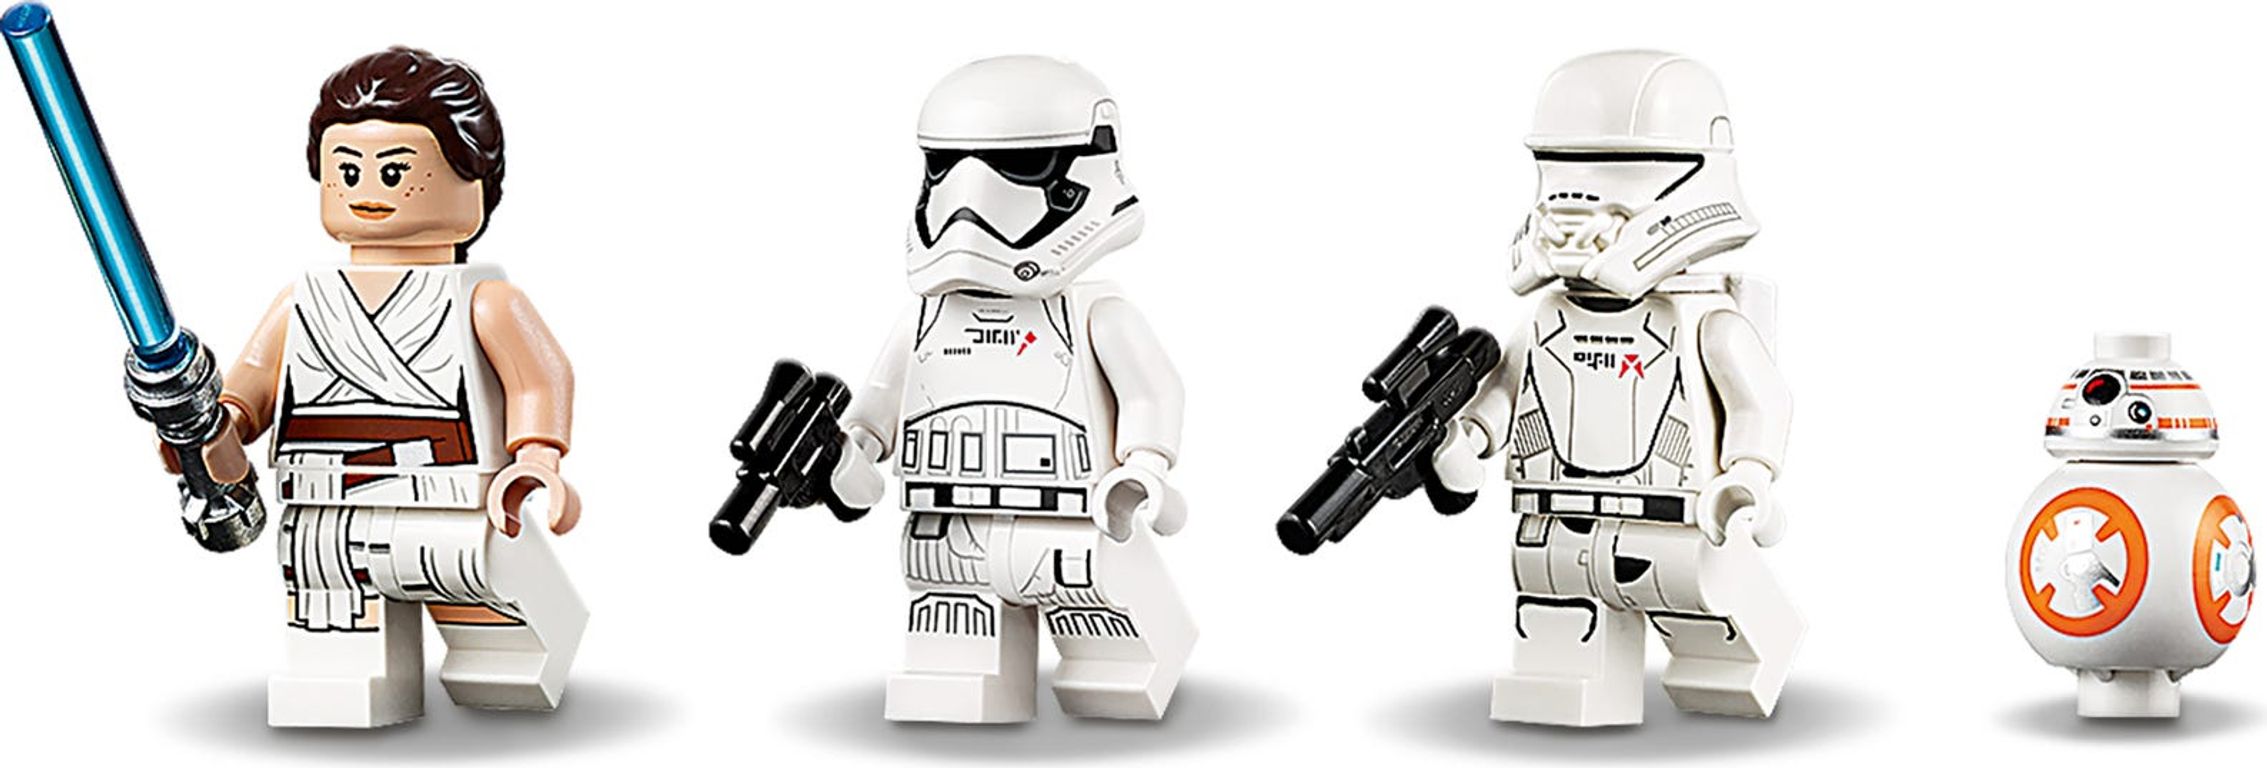 LEGO® Star Wars Pasaana Speeder Chase minifigures